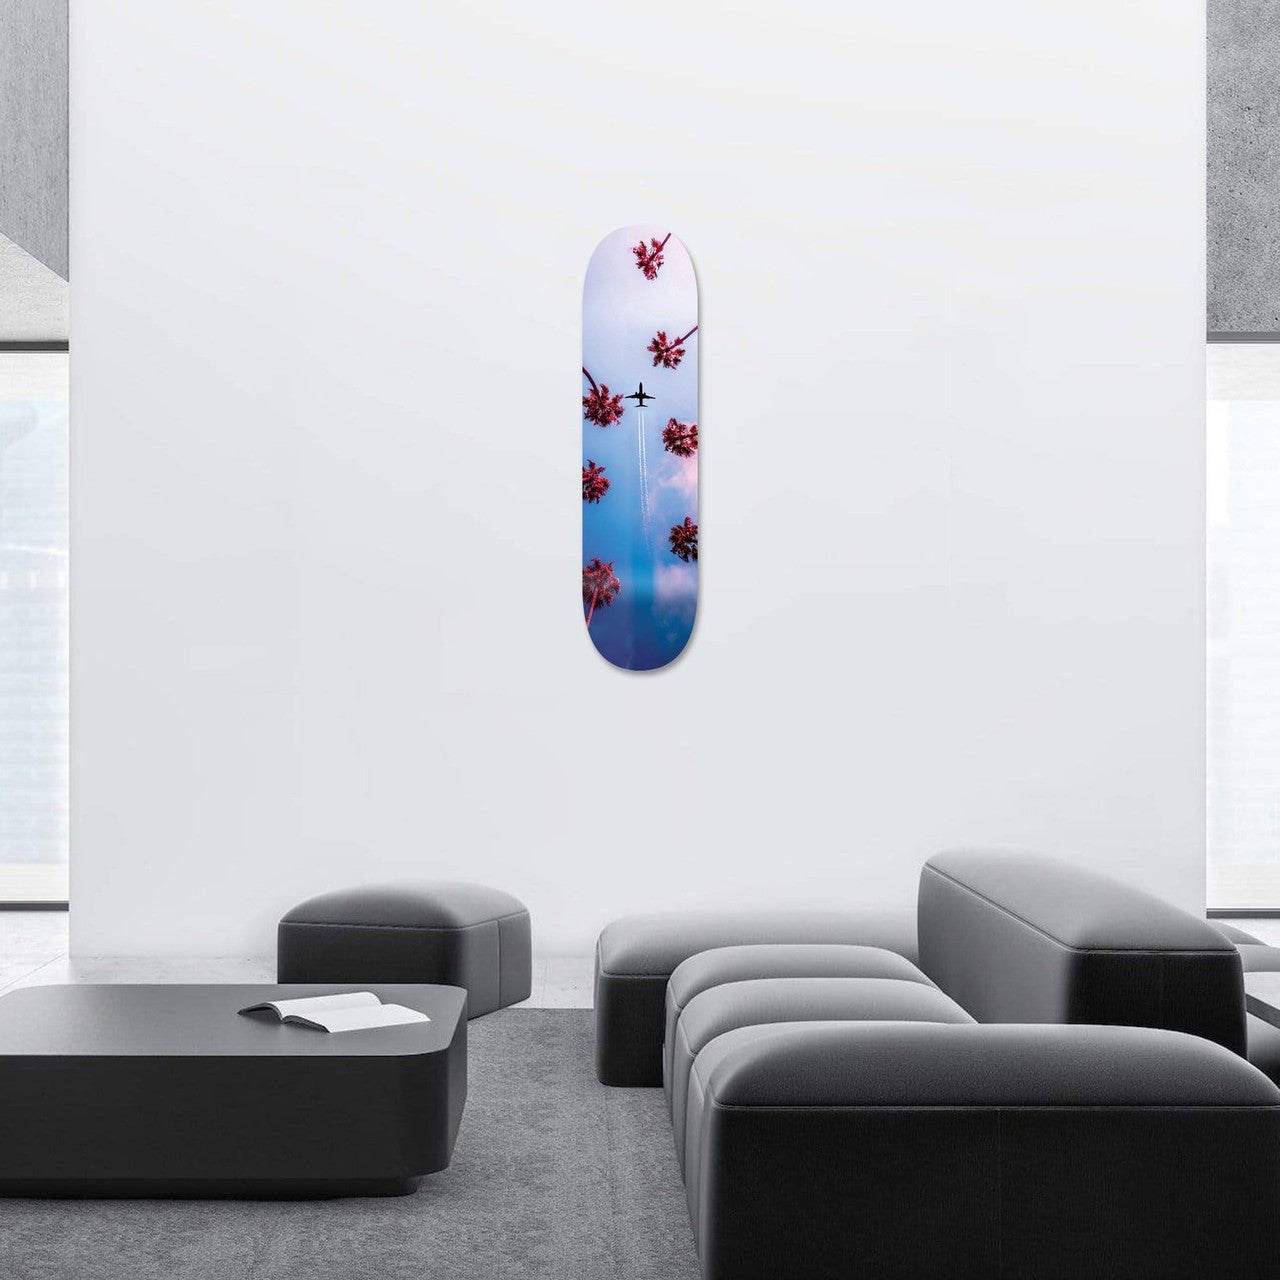 "Dreamy Sky" - Skateboard - The Art Lab Acrylic Glass Art - Skateboards, Surfboards & Glass Prints Wall Decor for your Home.